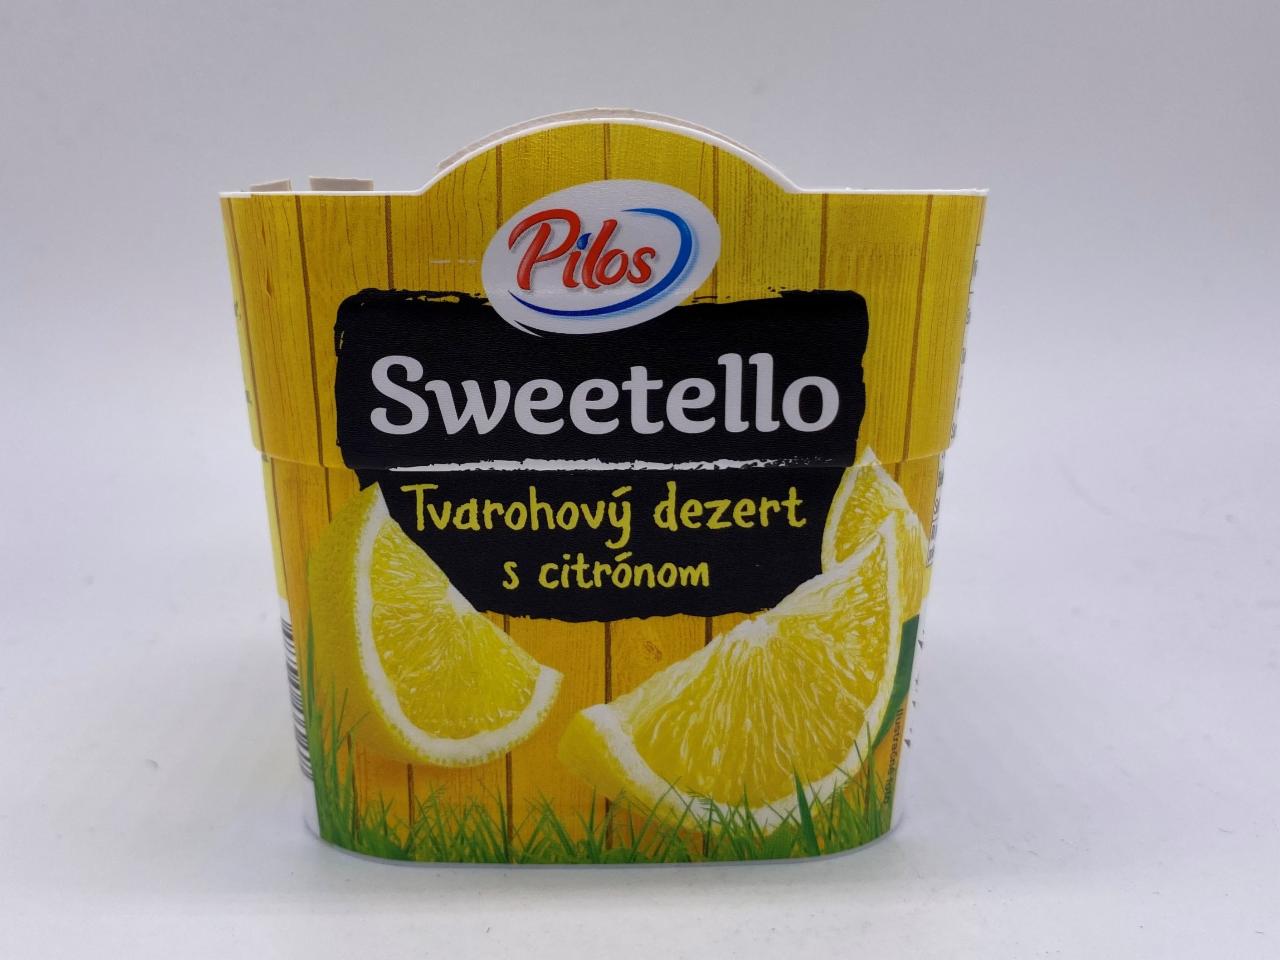 Fotografie - tvarohový dezert s citronem Pilos